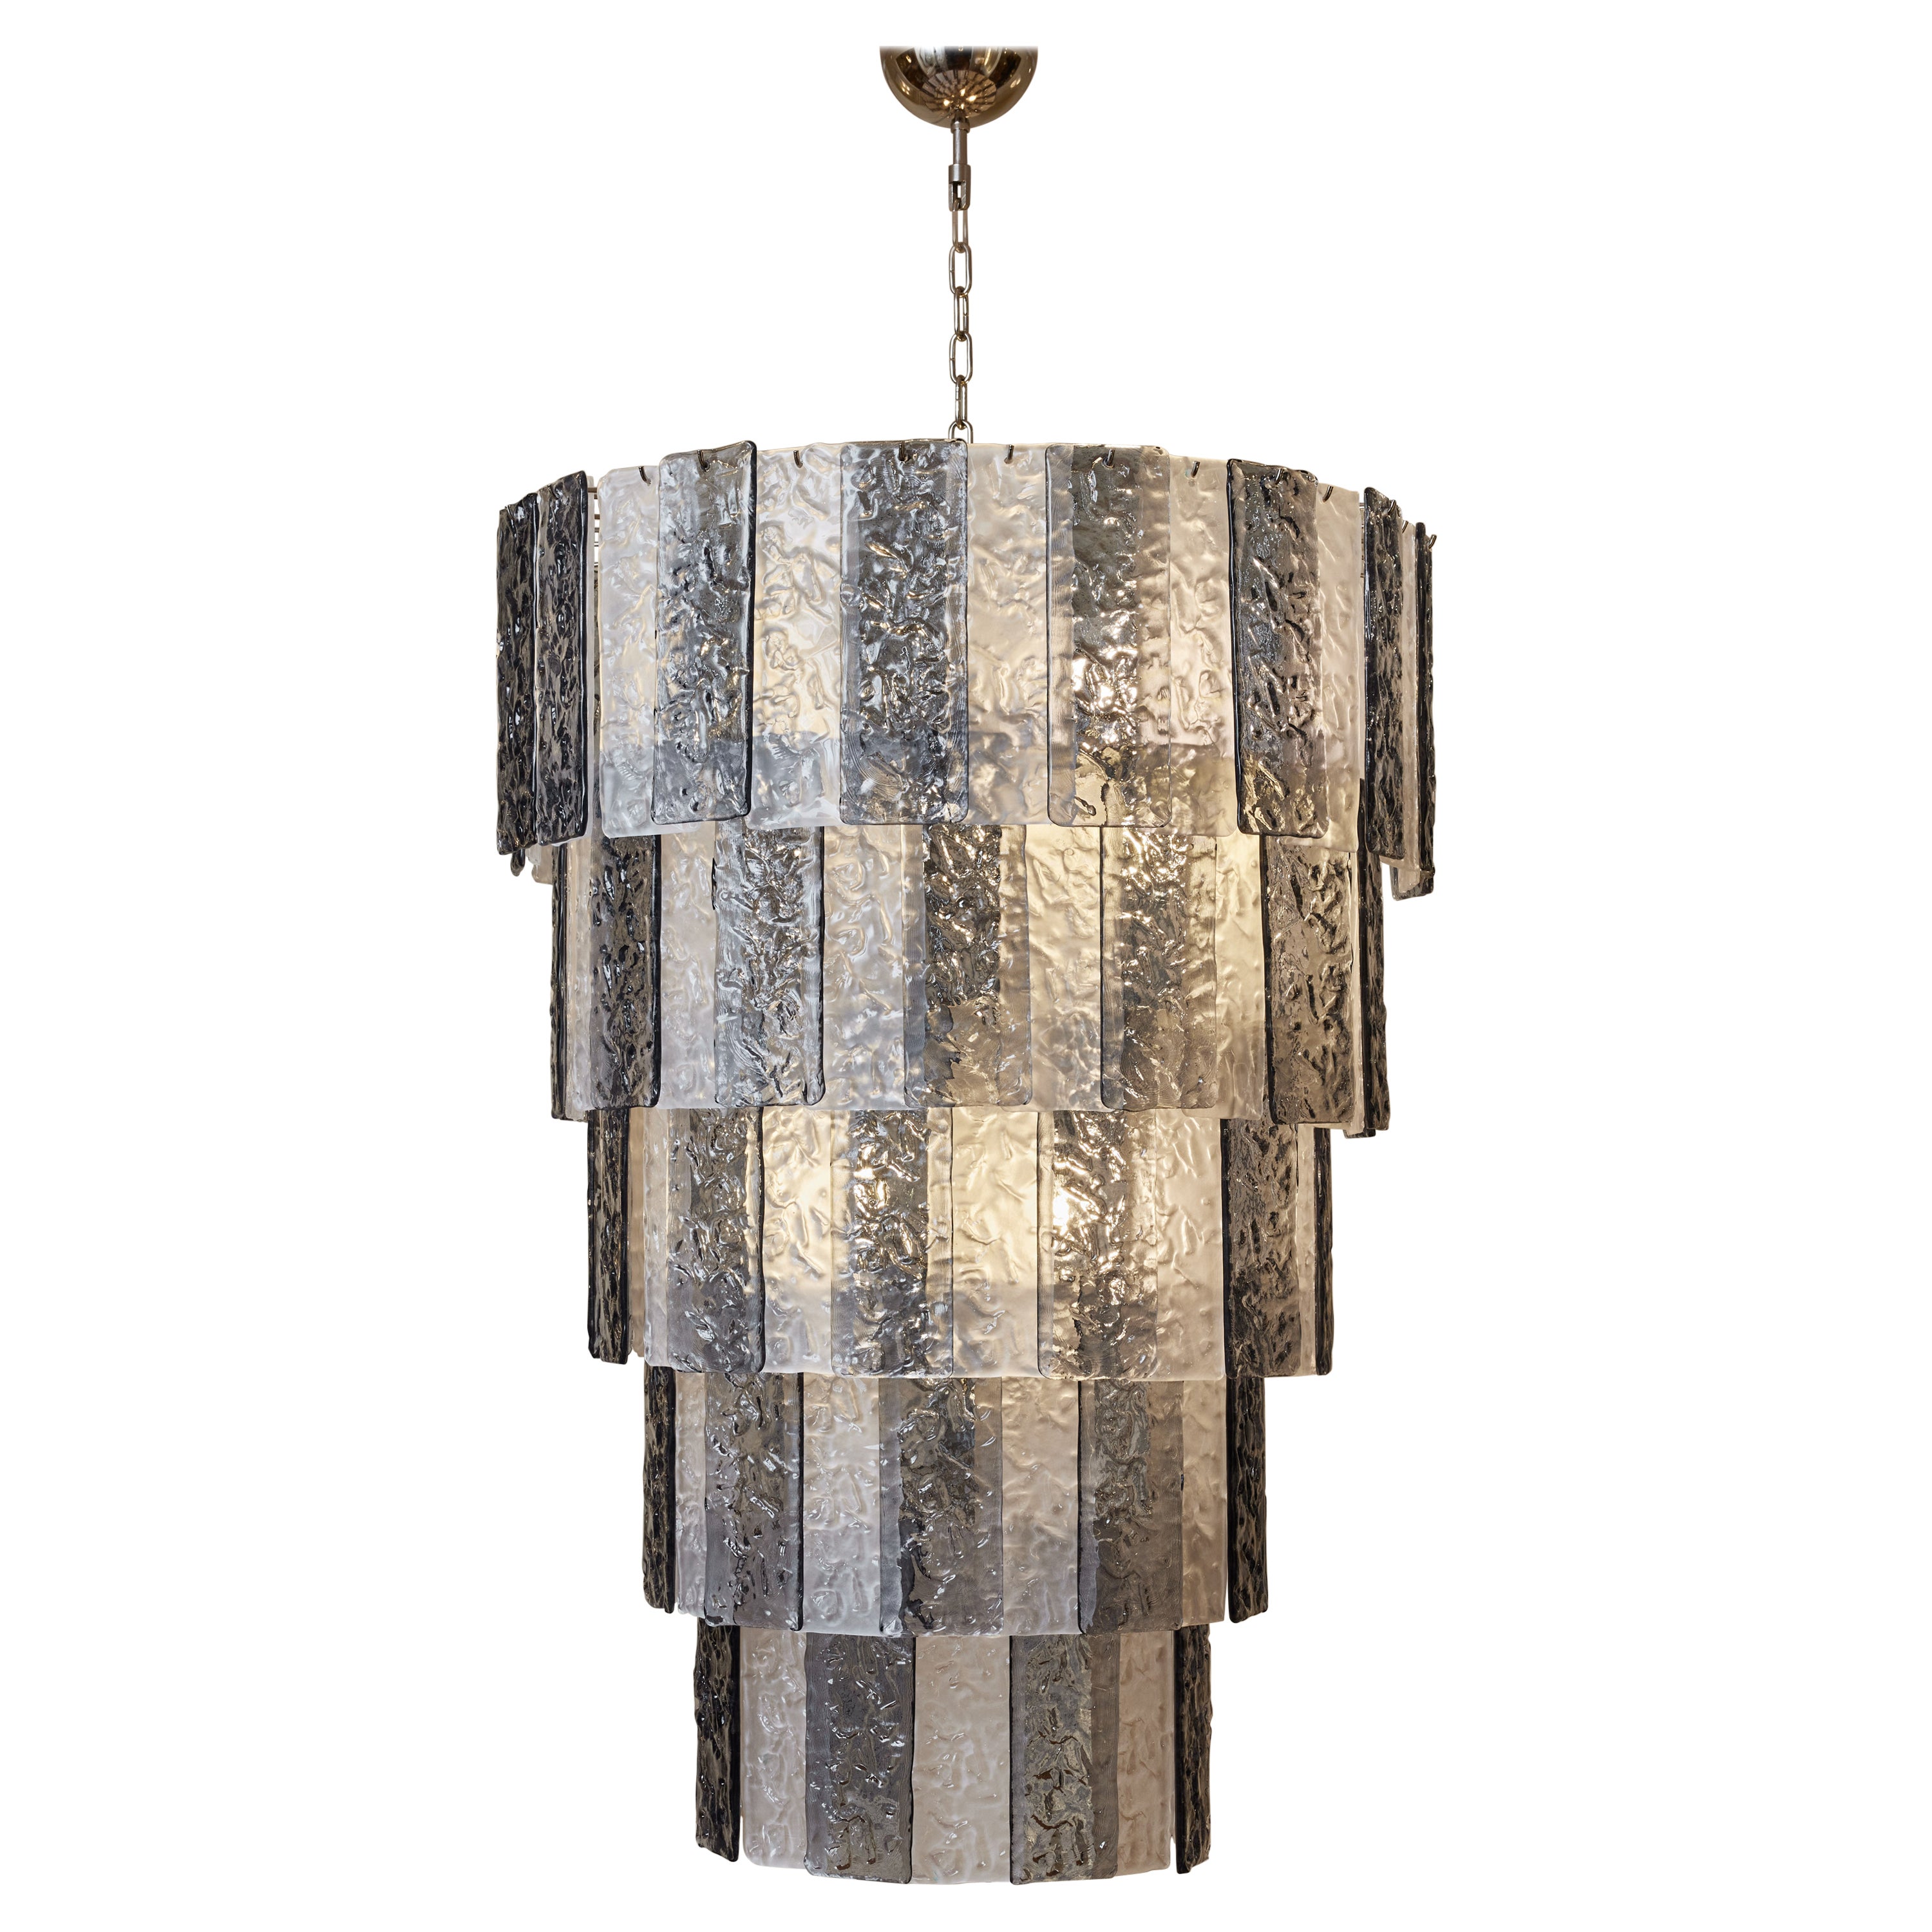 Murano glass chandelier by Studio Glustin.